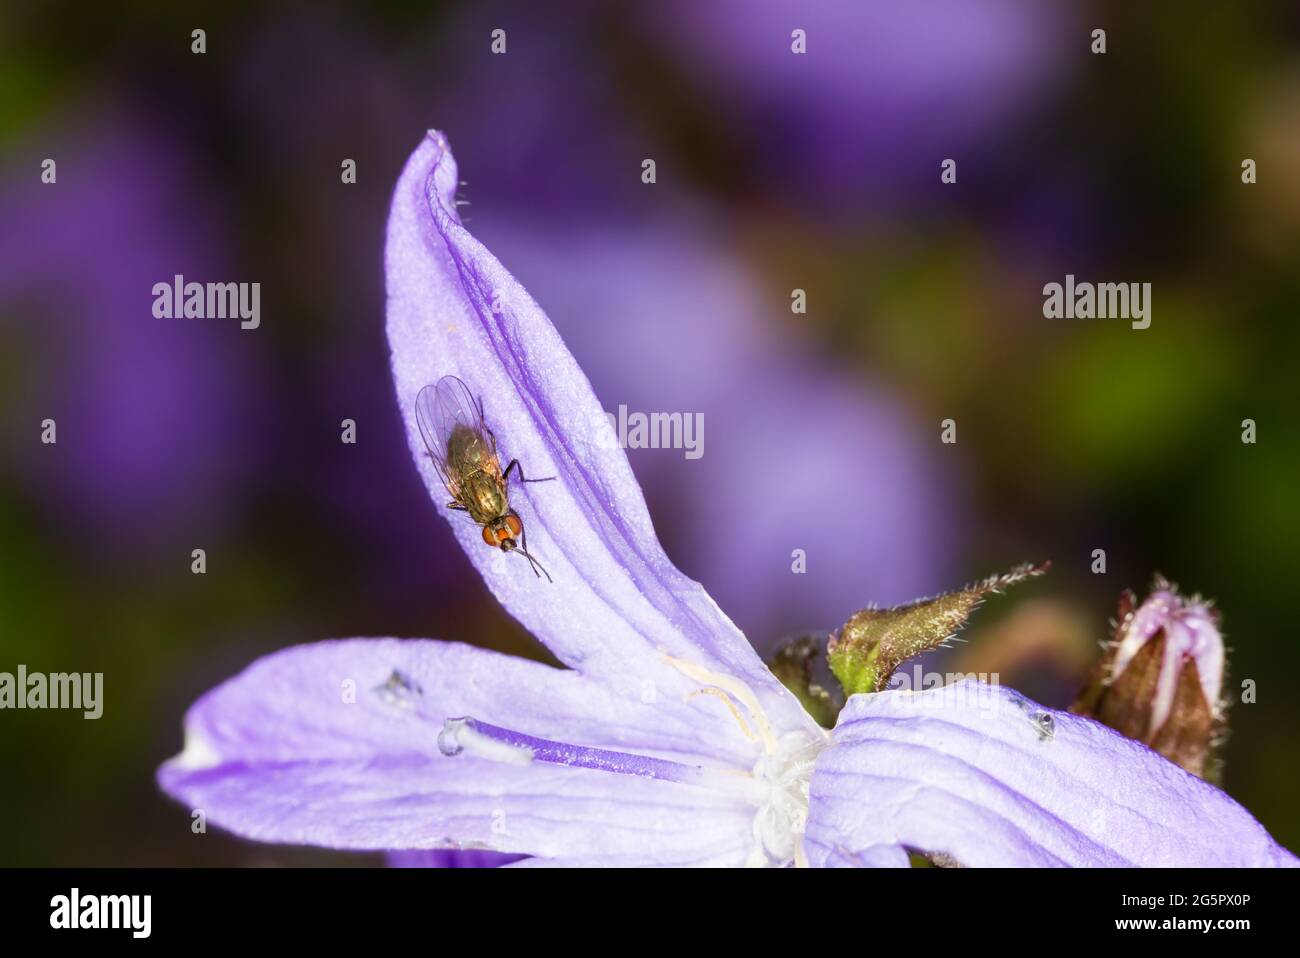 Fruit fly on purple Campanula Poscharskyana flower petal. Macro. Stock Photo